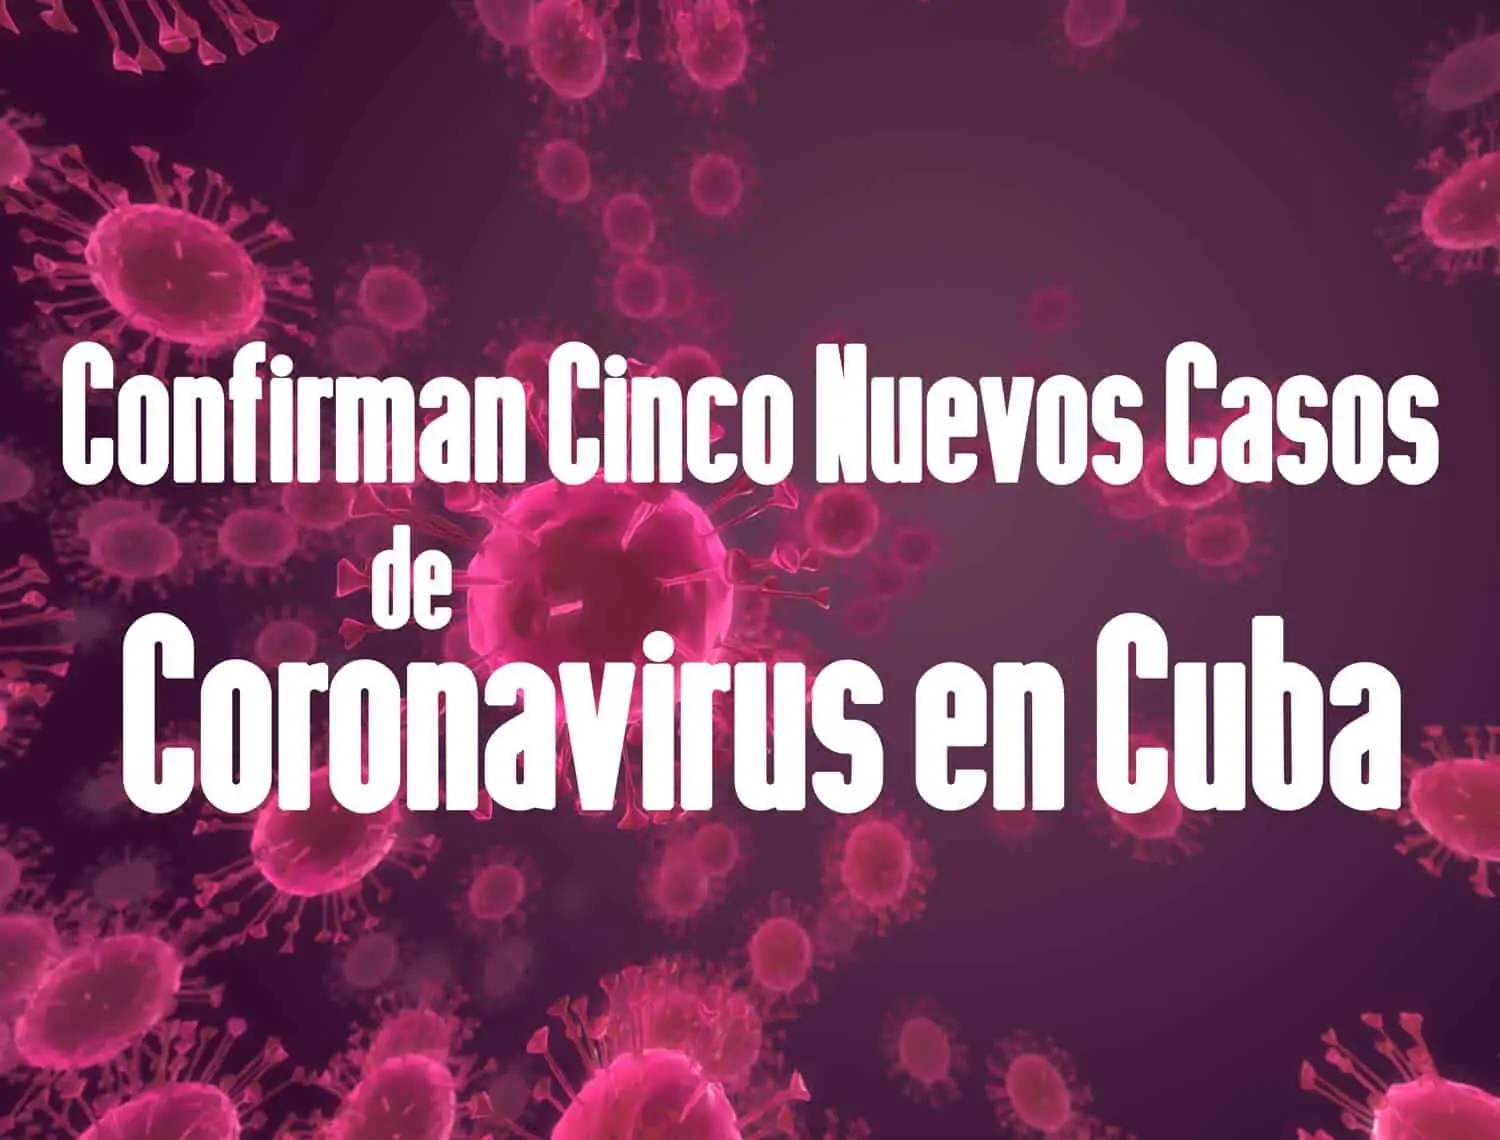 Confirman Cinco Nuevos Casos de Coronavirus en Cuba